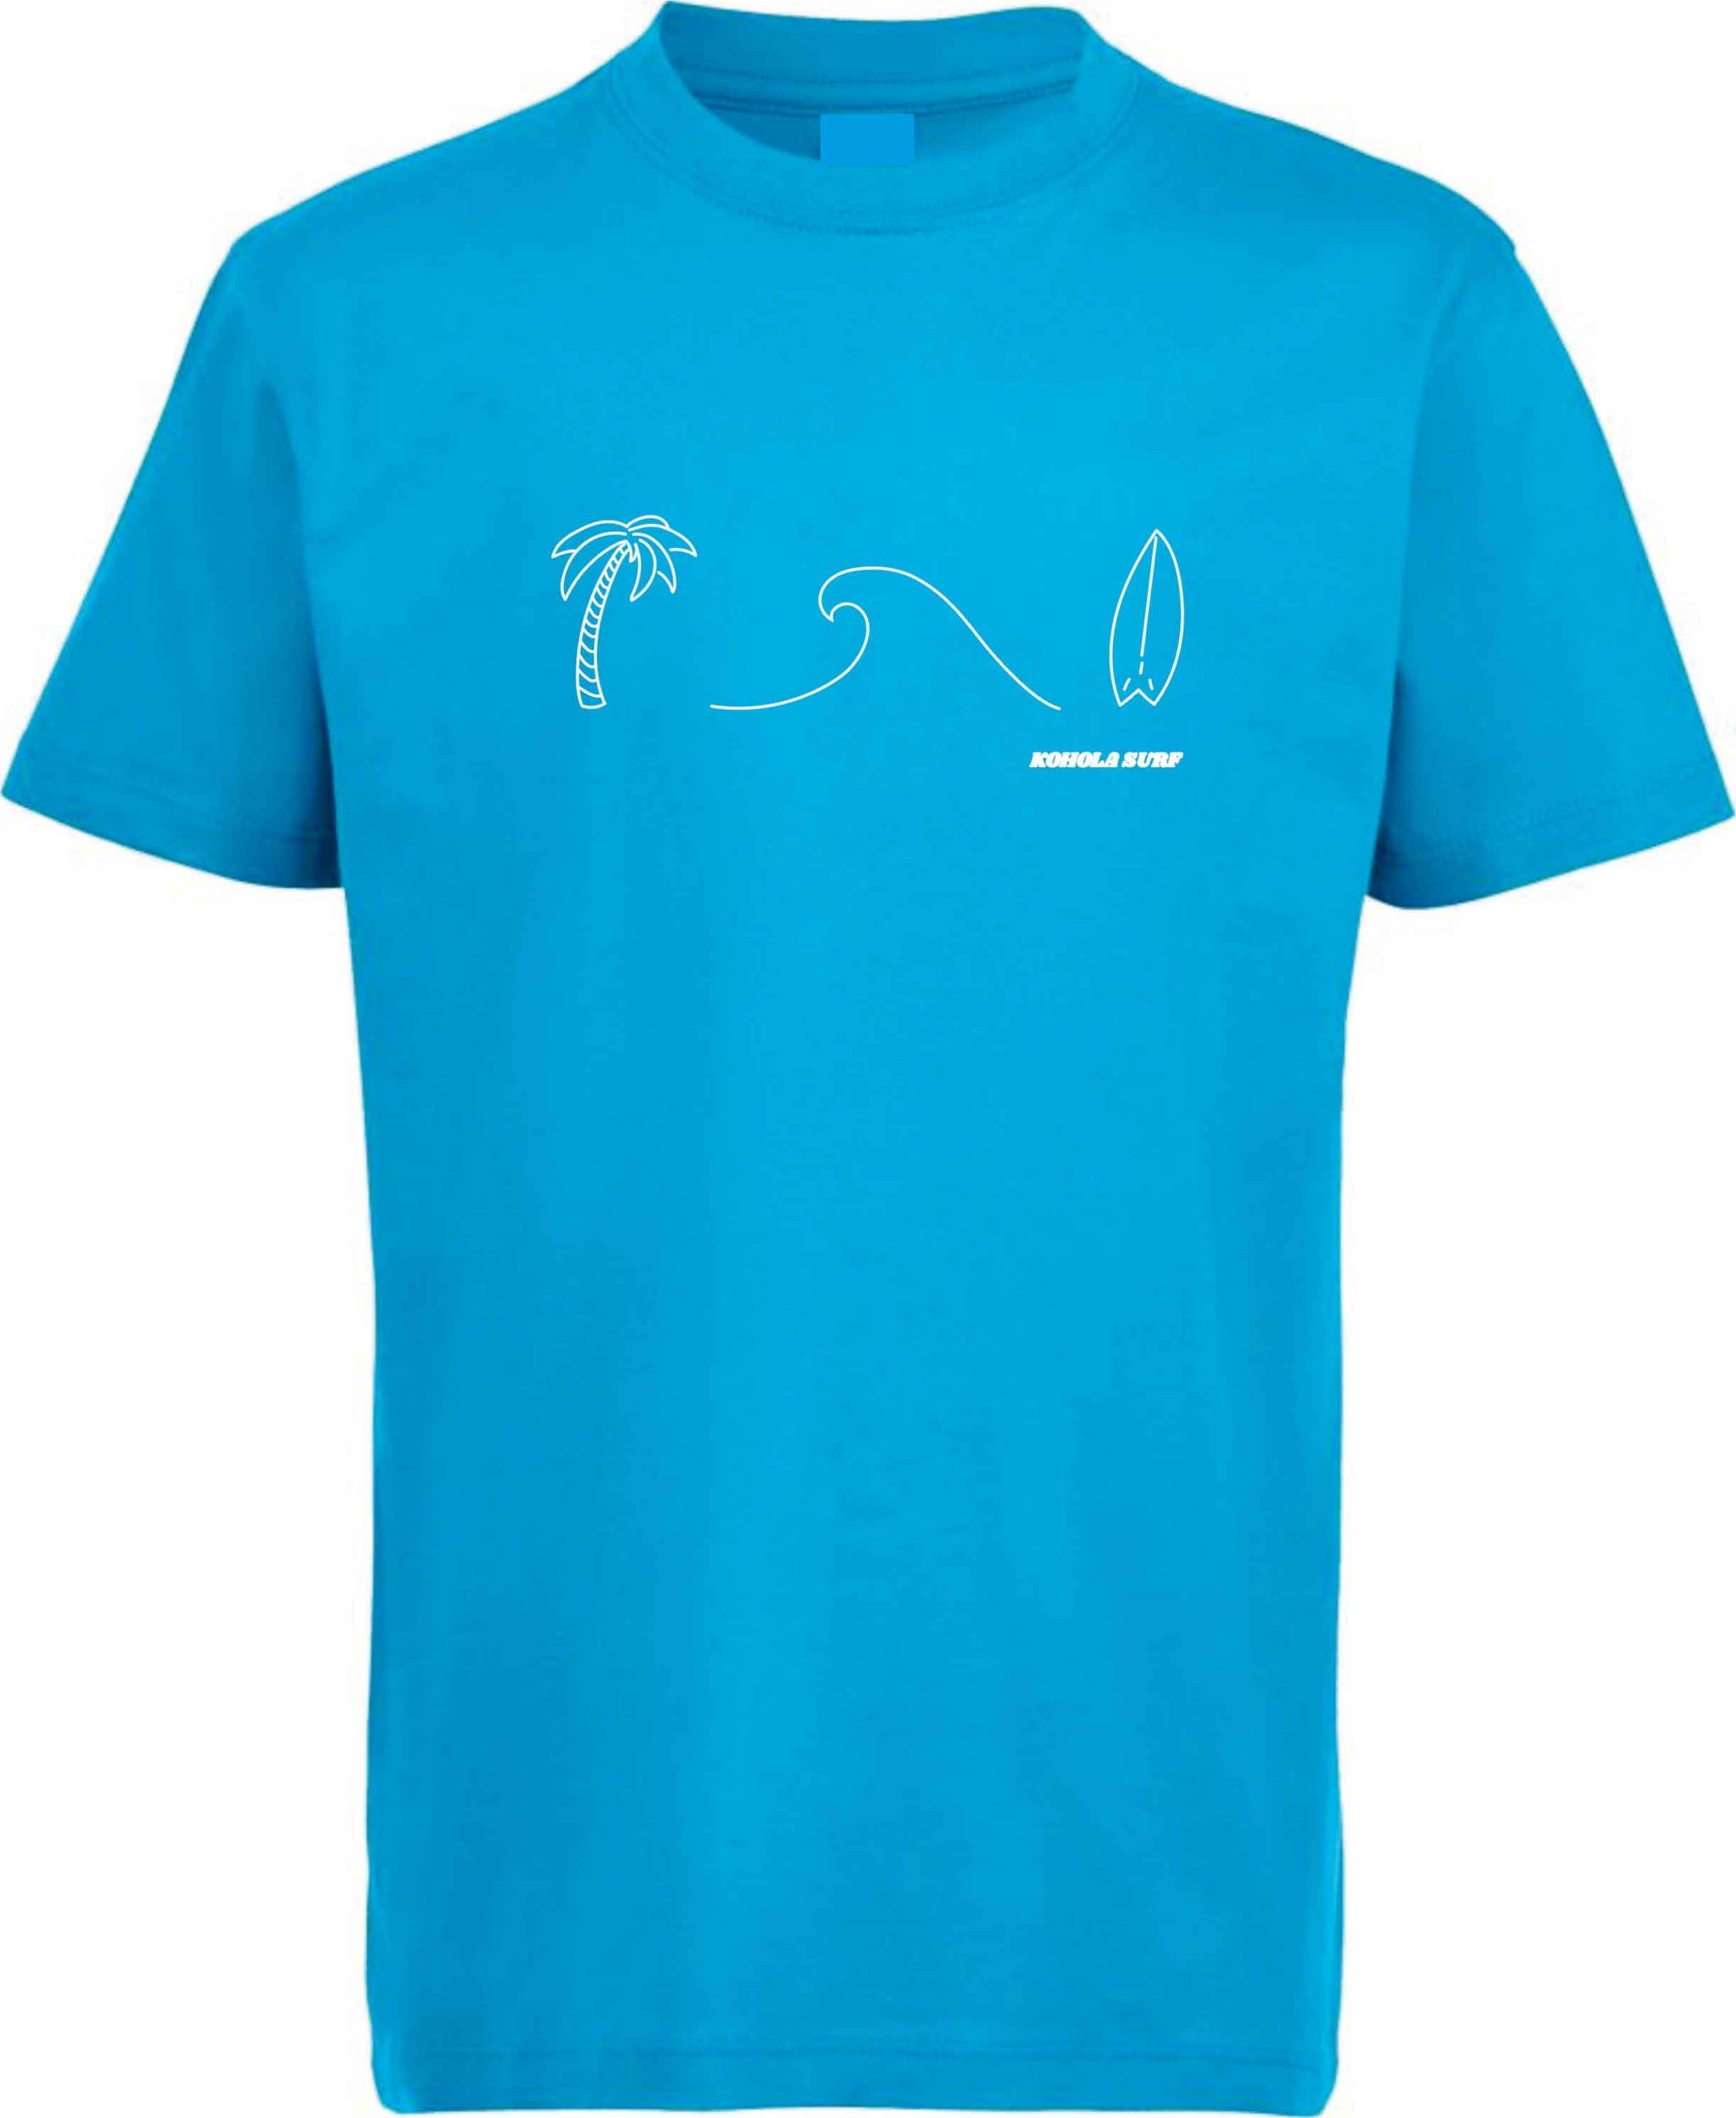 Palm Trees & Waves Kids T-Shirt